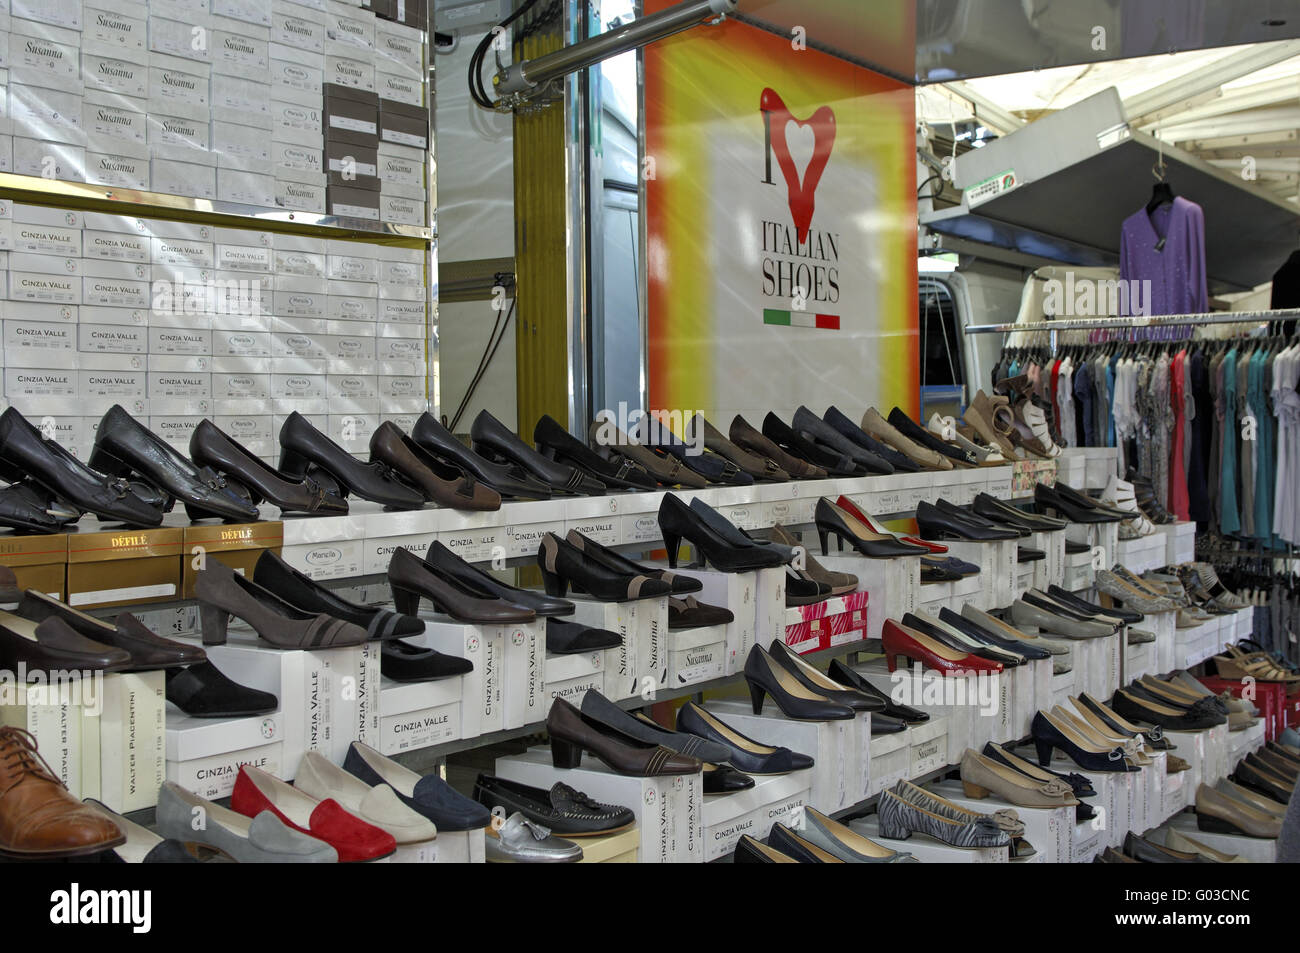 Market stall selling Italian shoes, Luino, Italy Stock Photo